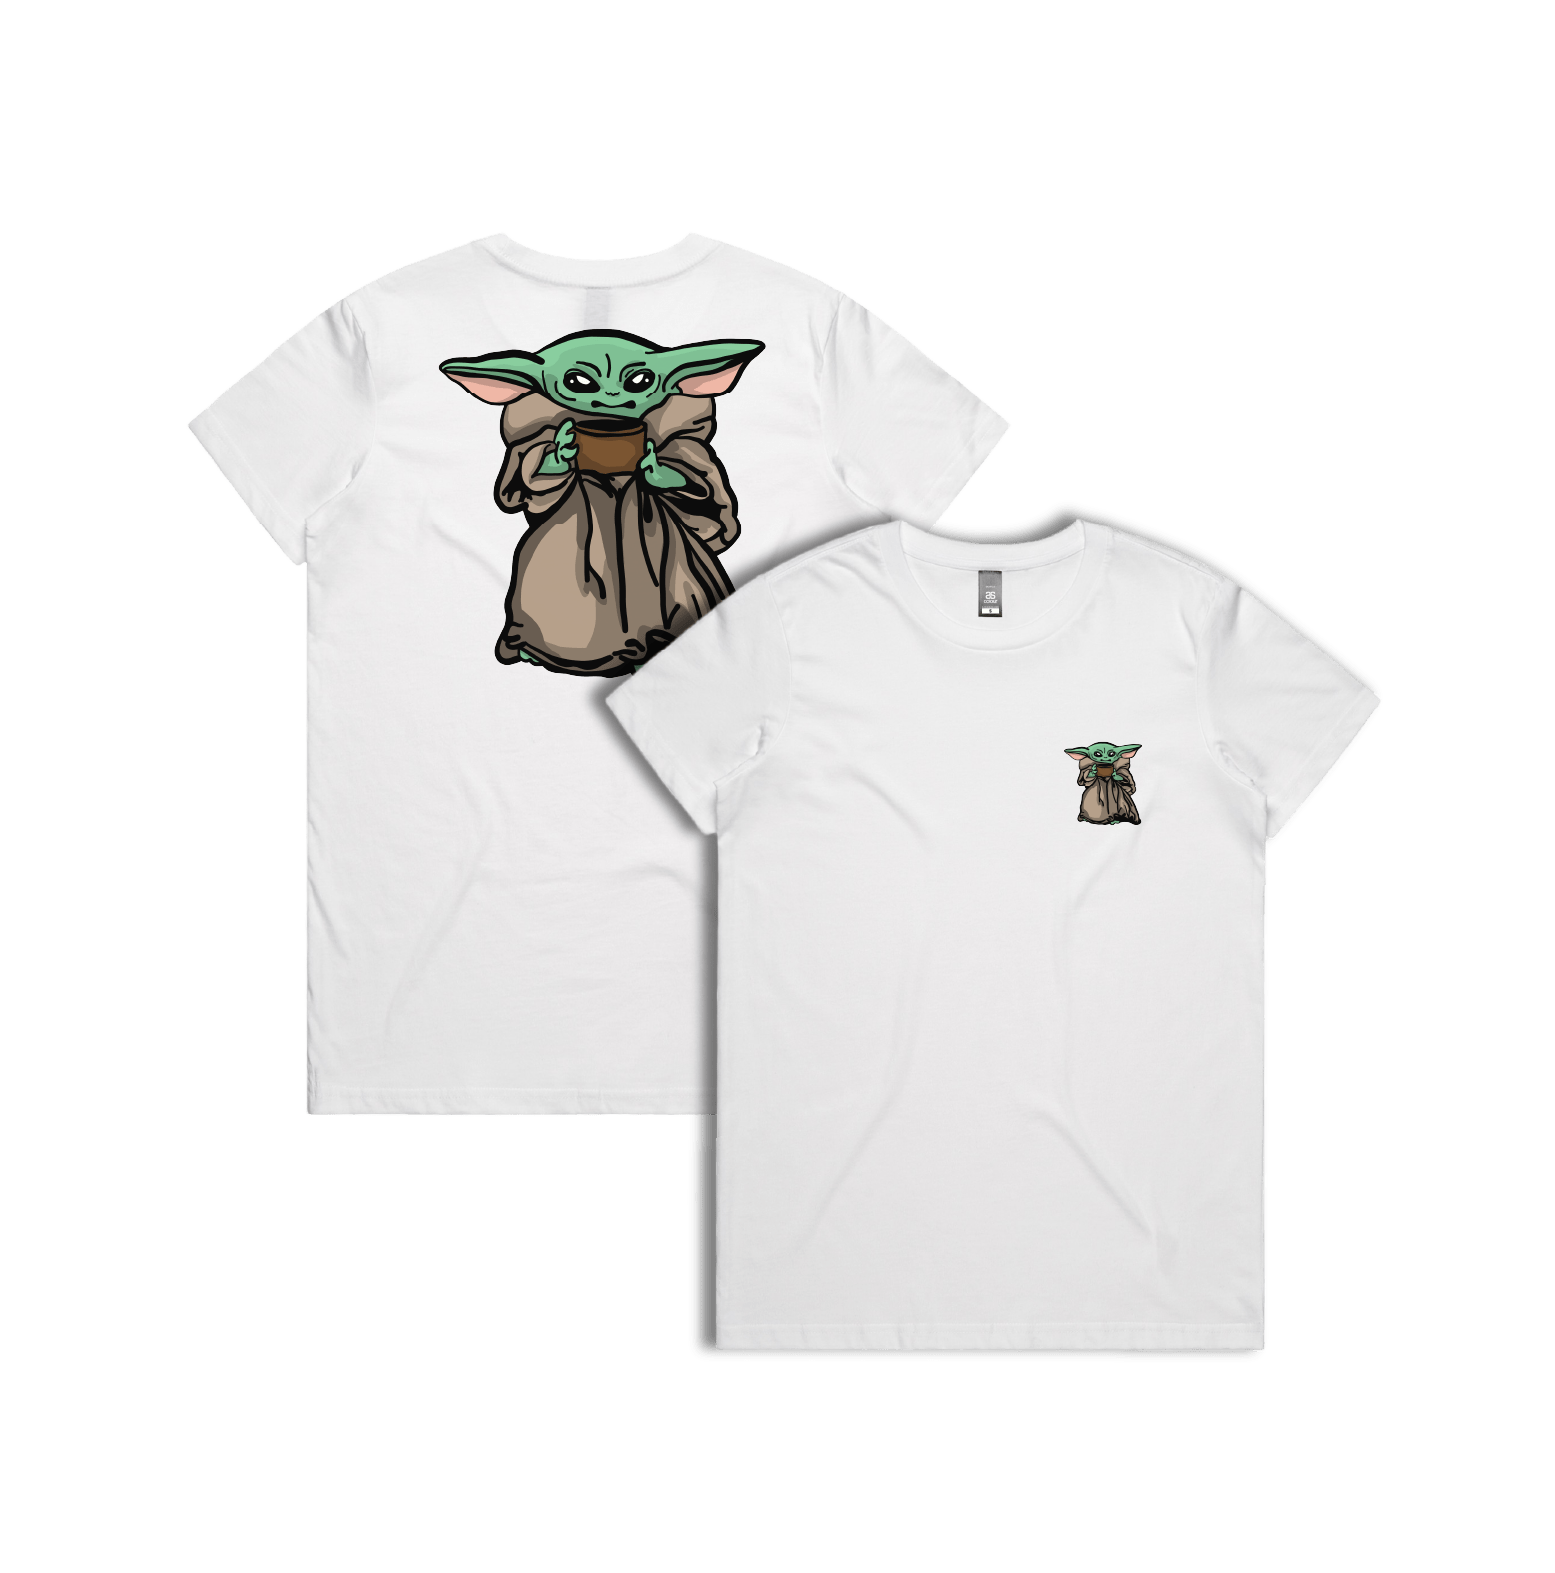 XS / White / Small Front & Large Back Design Baby Yoda 👶 - Women's T Shirt